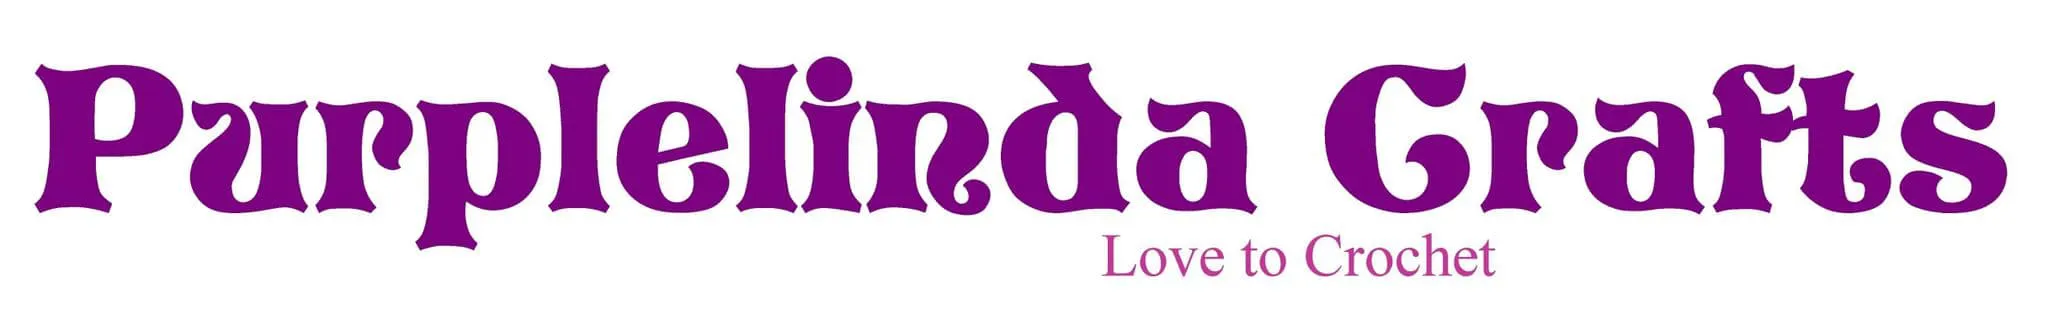 Purplelinda Crafts Codes promotionnels 